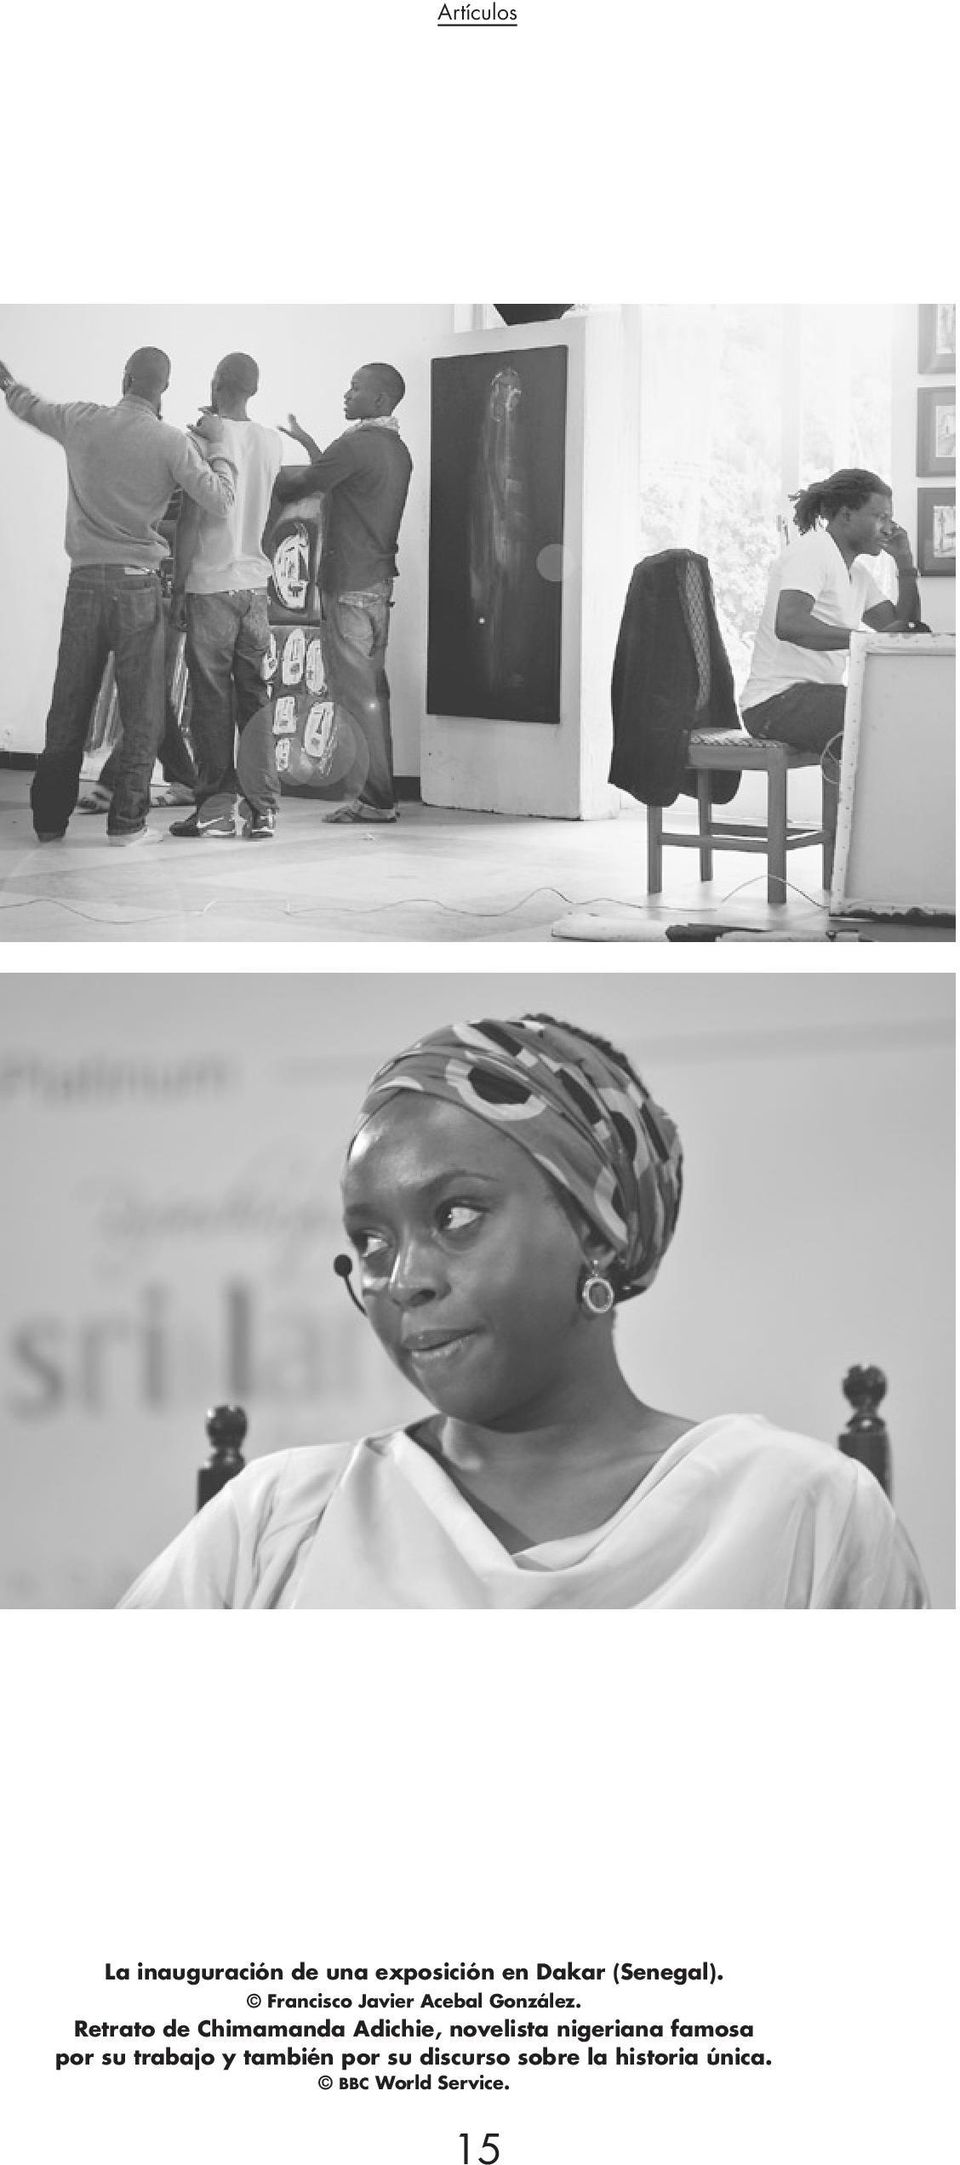 Retrato de Chimamanda Adichie, novelista nigeriana famosa